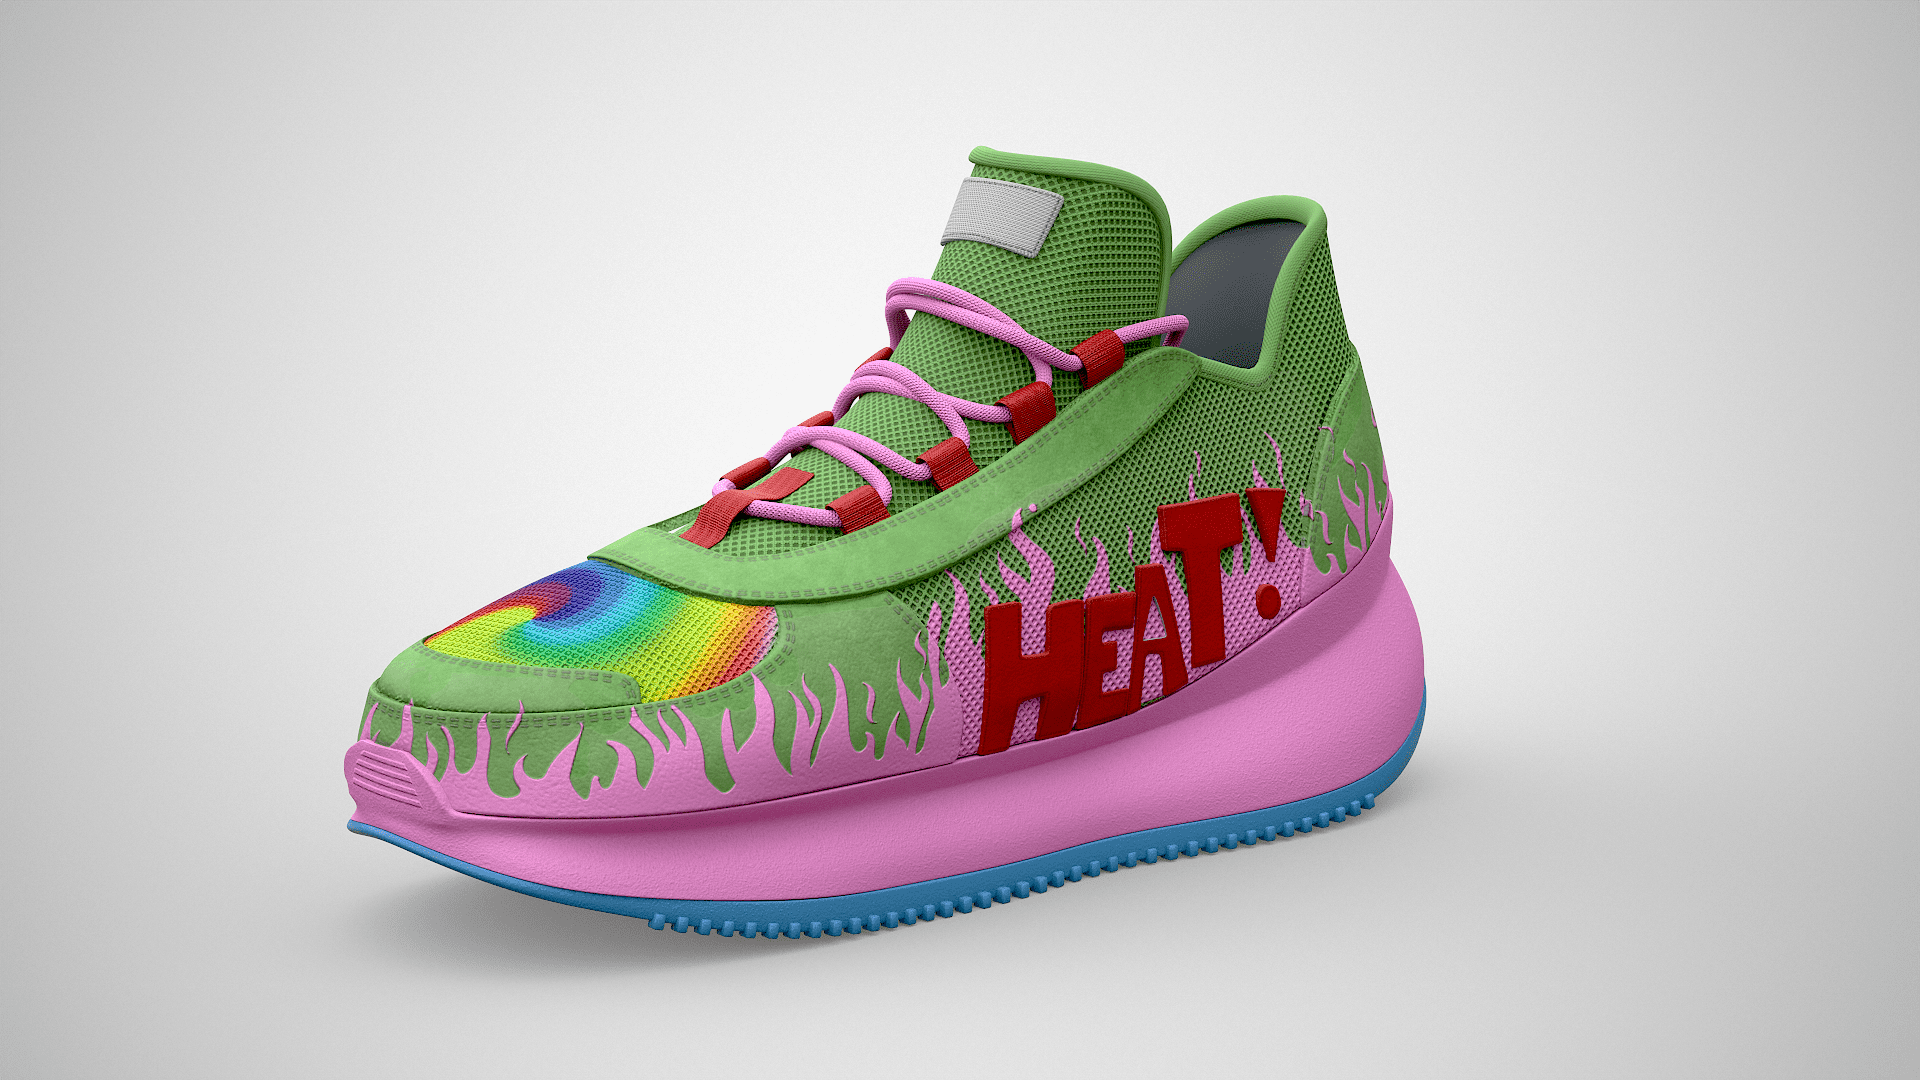 Created Sneaker